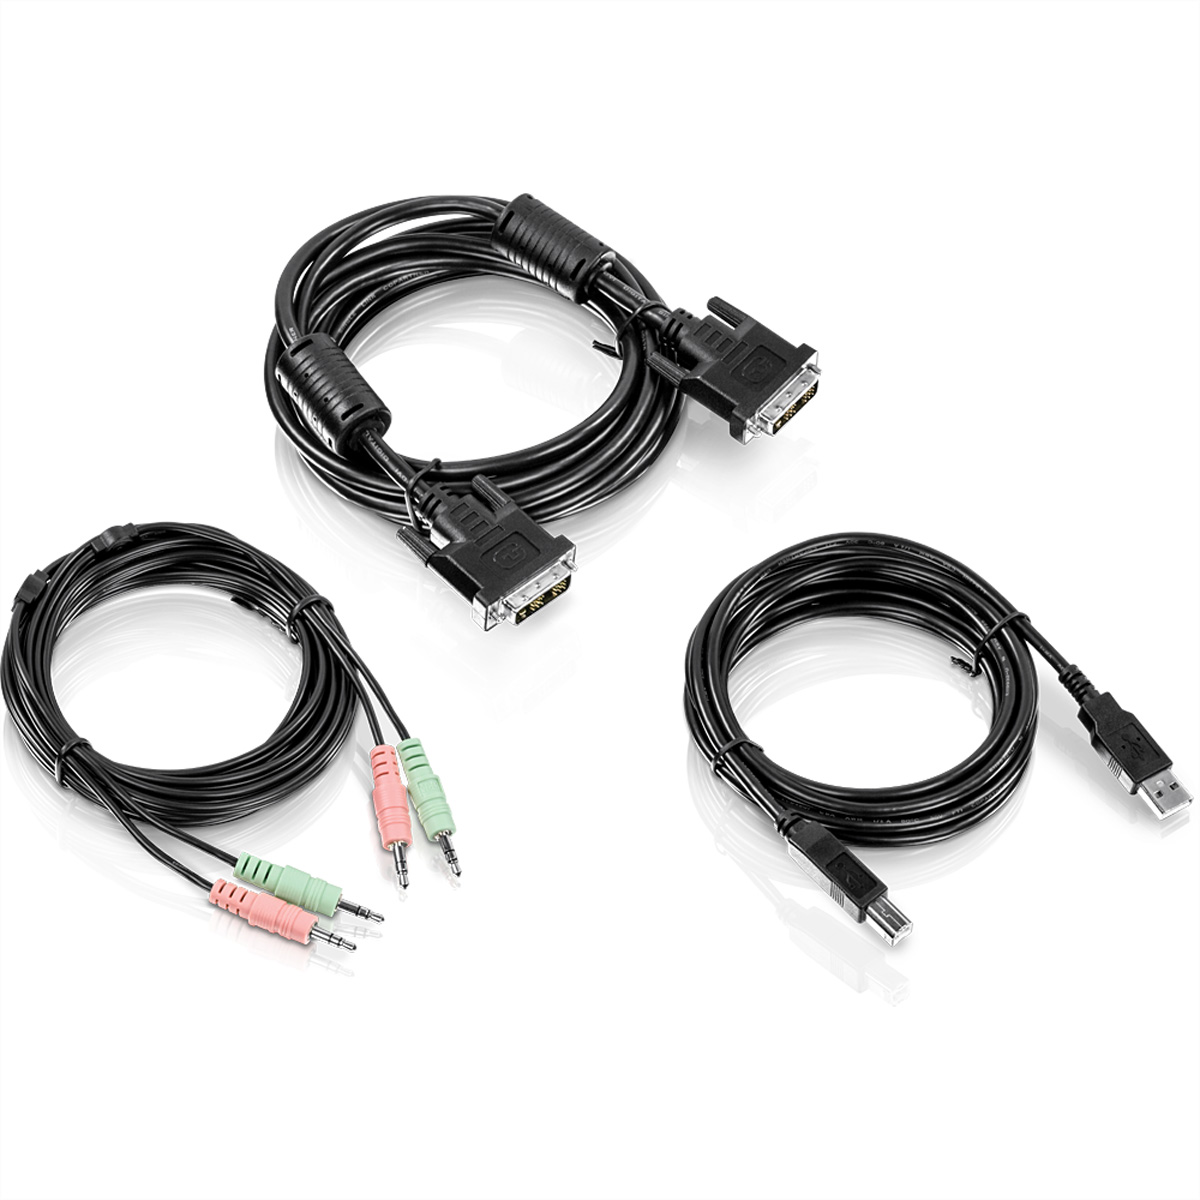 TRENDnet TK-CD10 KVM Kabel Kit 3m - DVI-I, USB, Audio für Computer